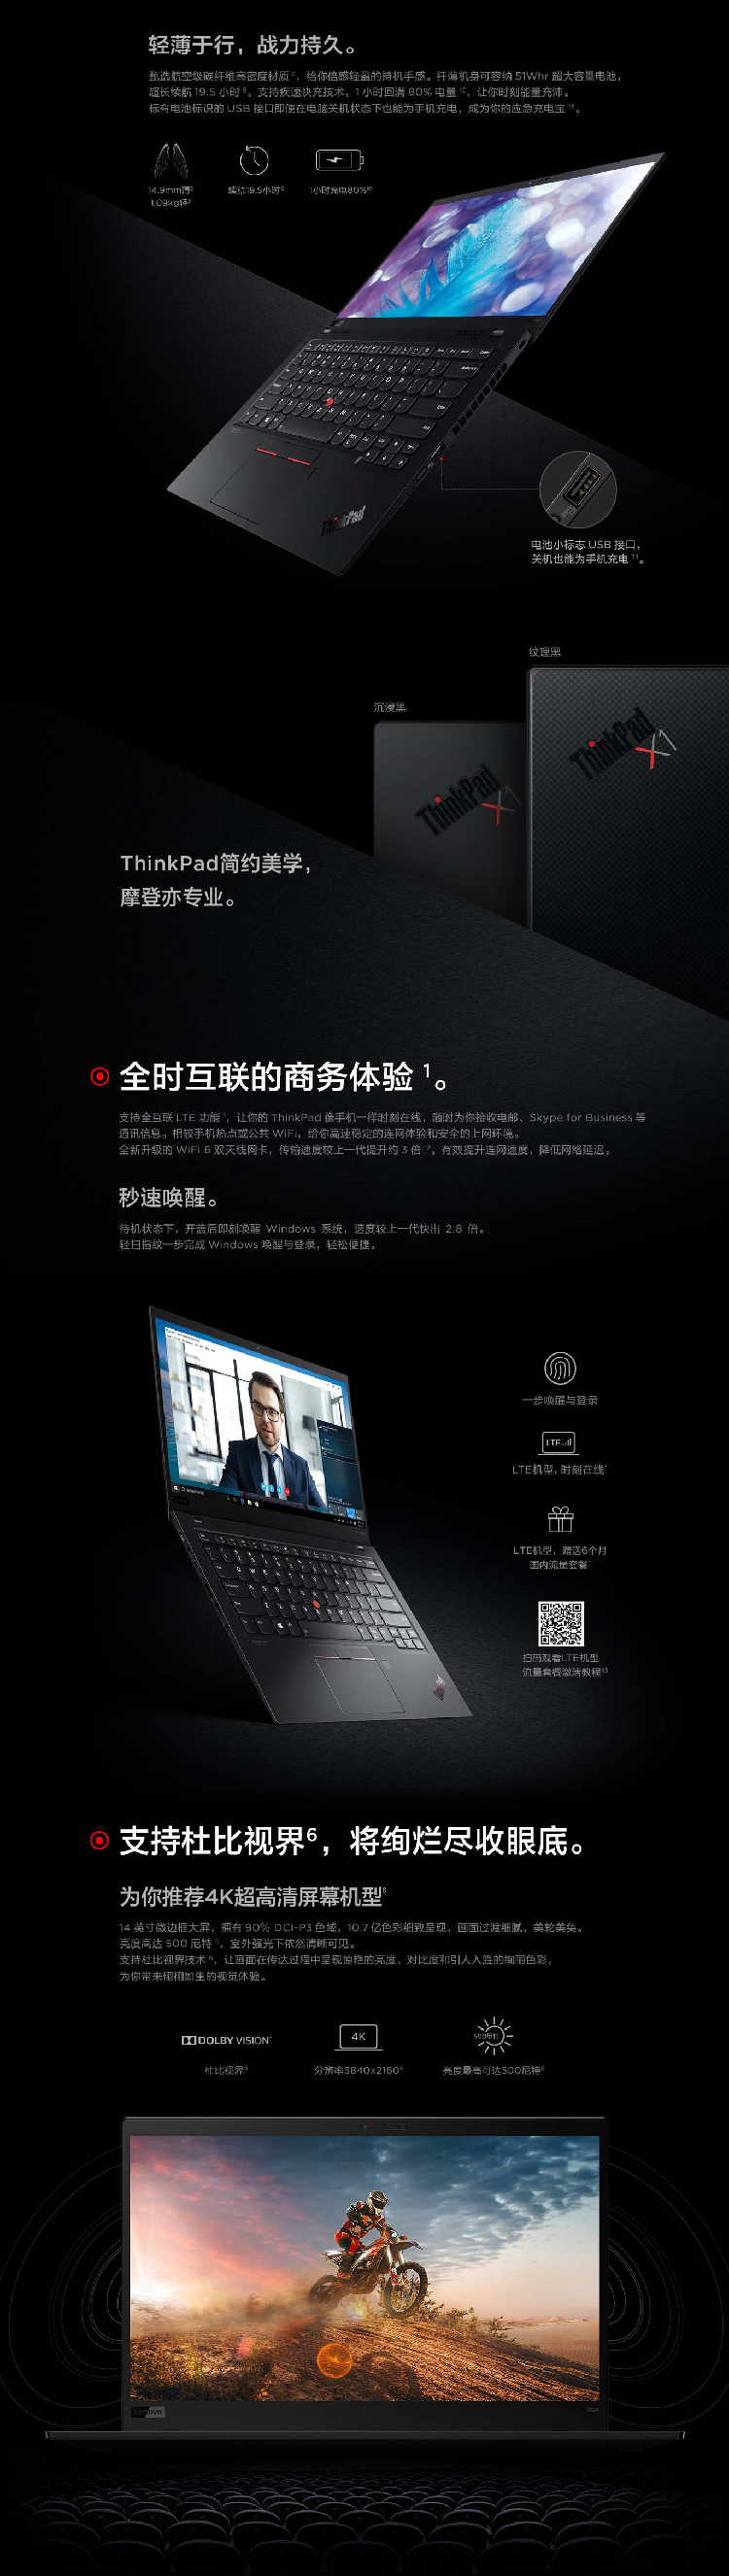 ThinkPad-X1-Carbon-1920_02.jpg